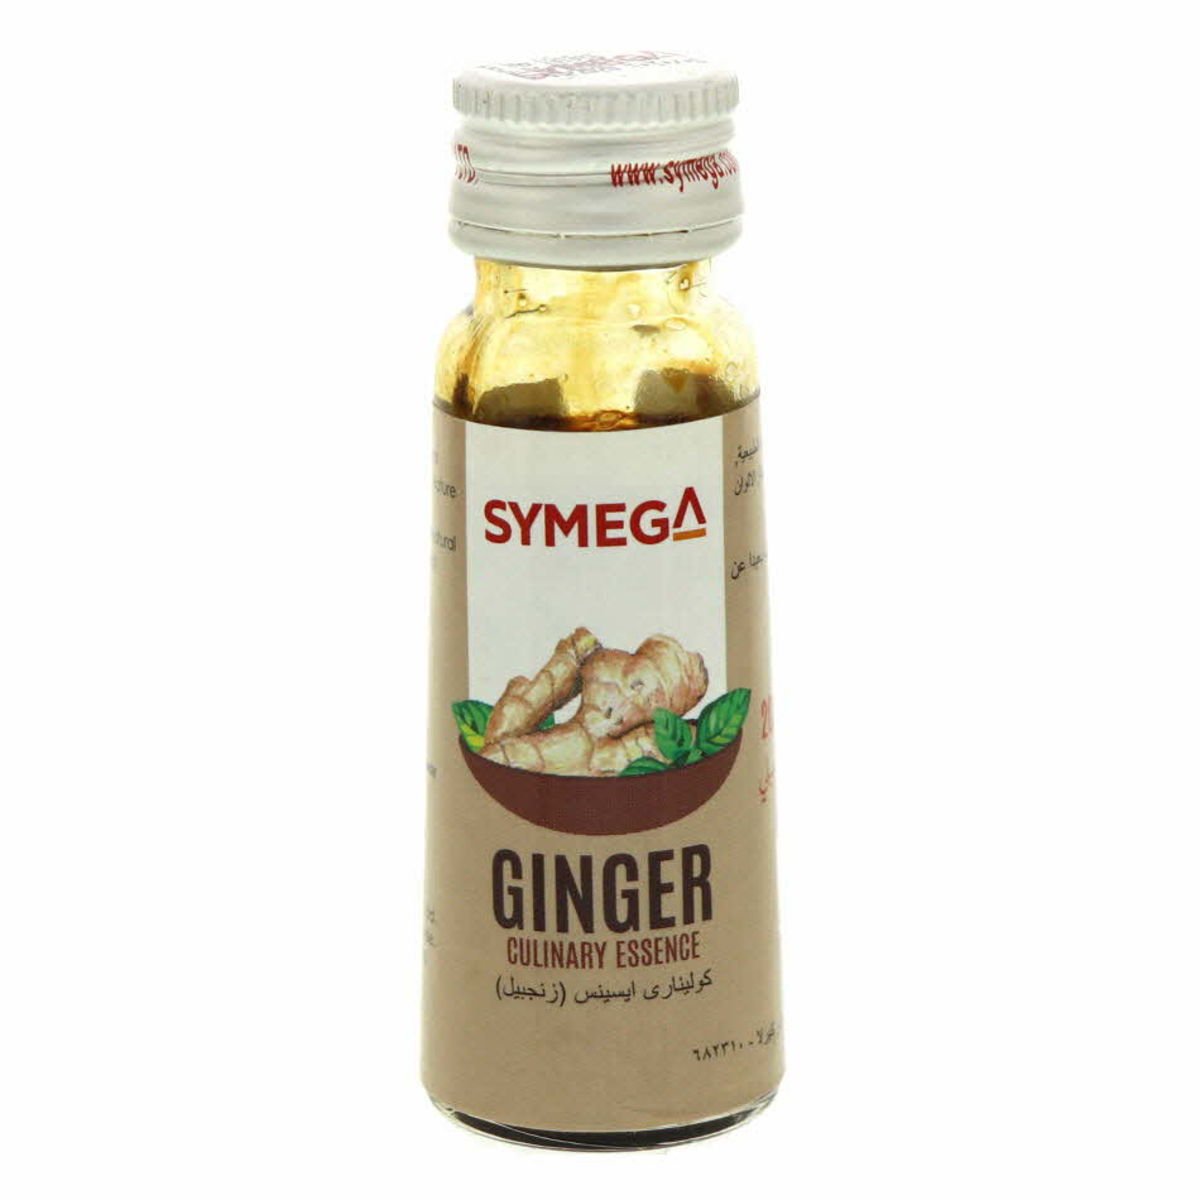 Symega Ginger Culinary Essence 20 ml